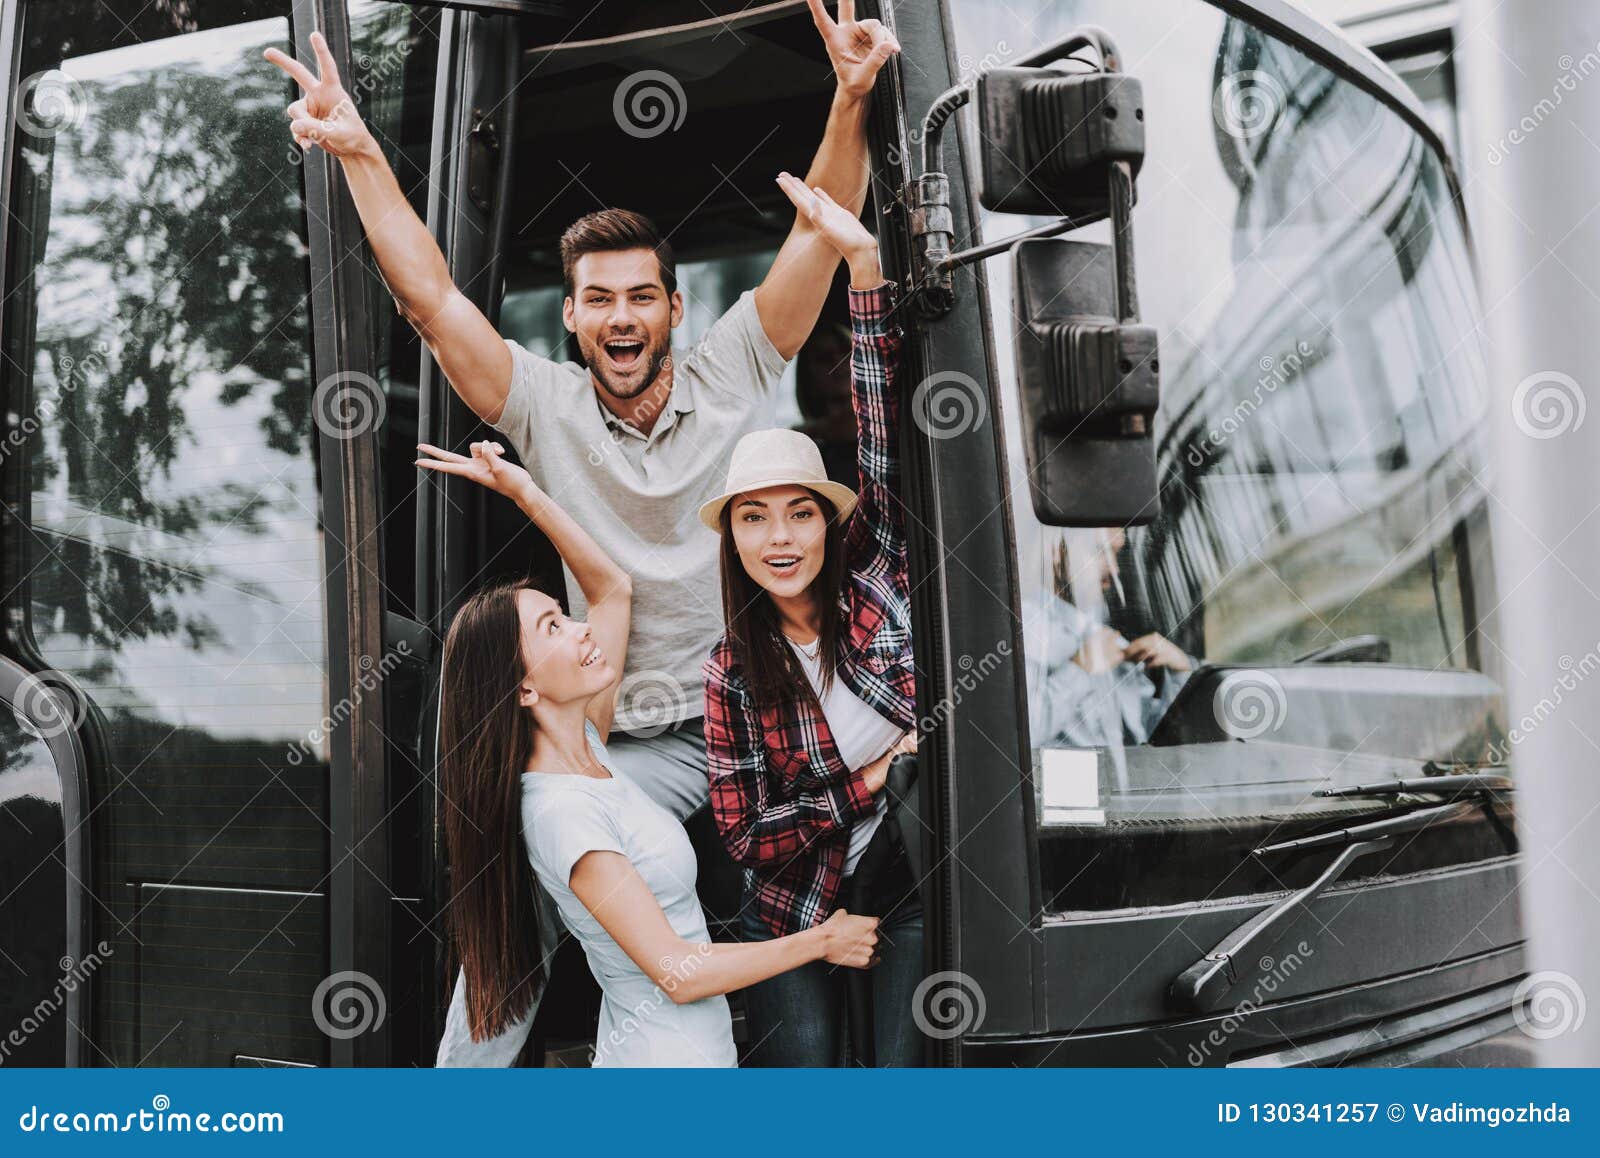 tourist on the bus